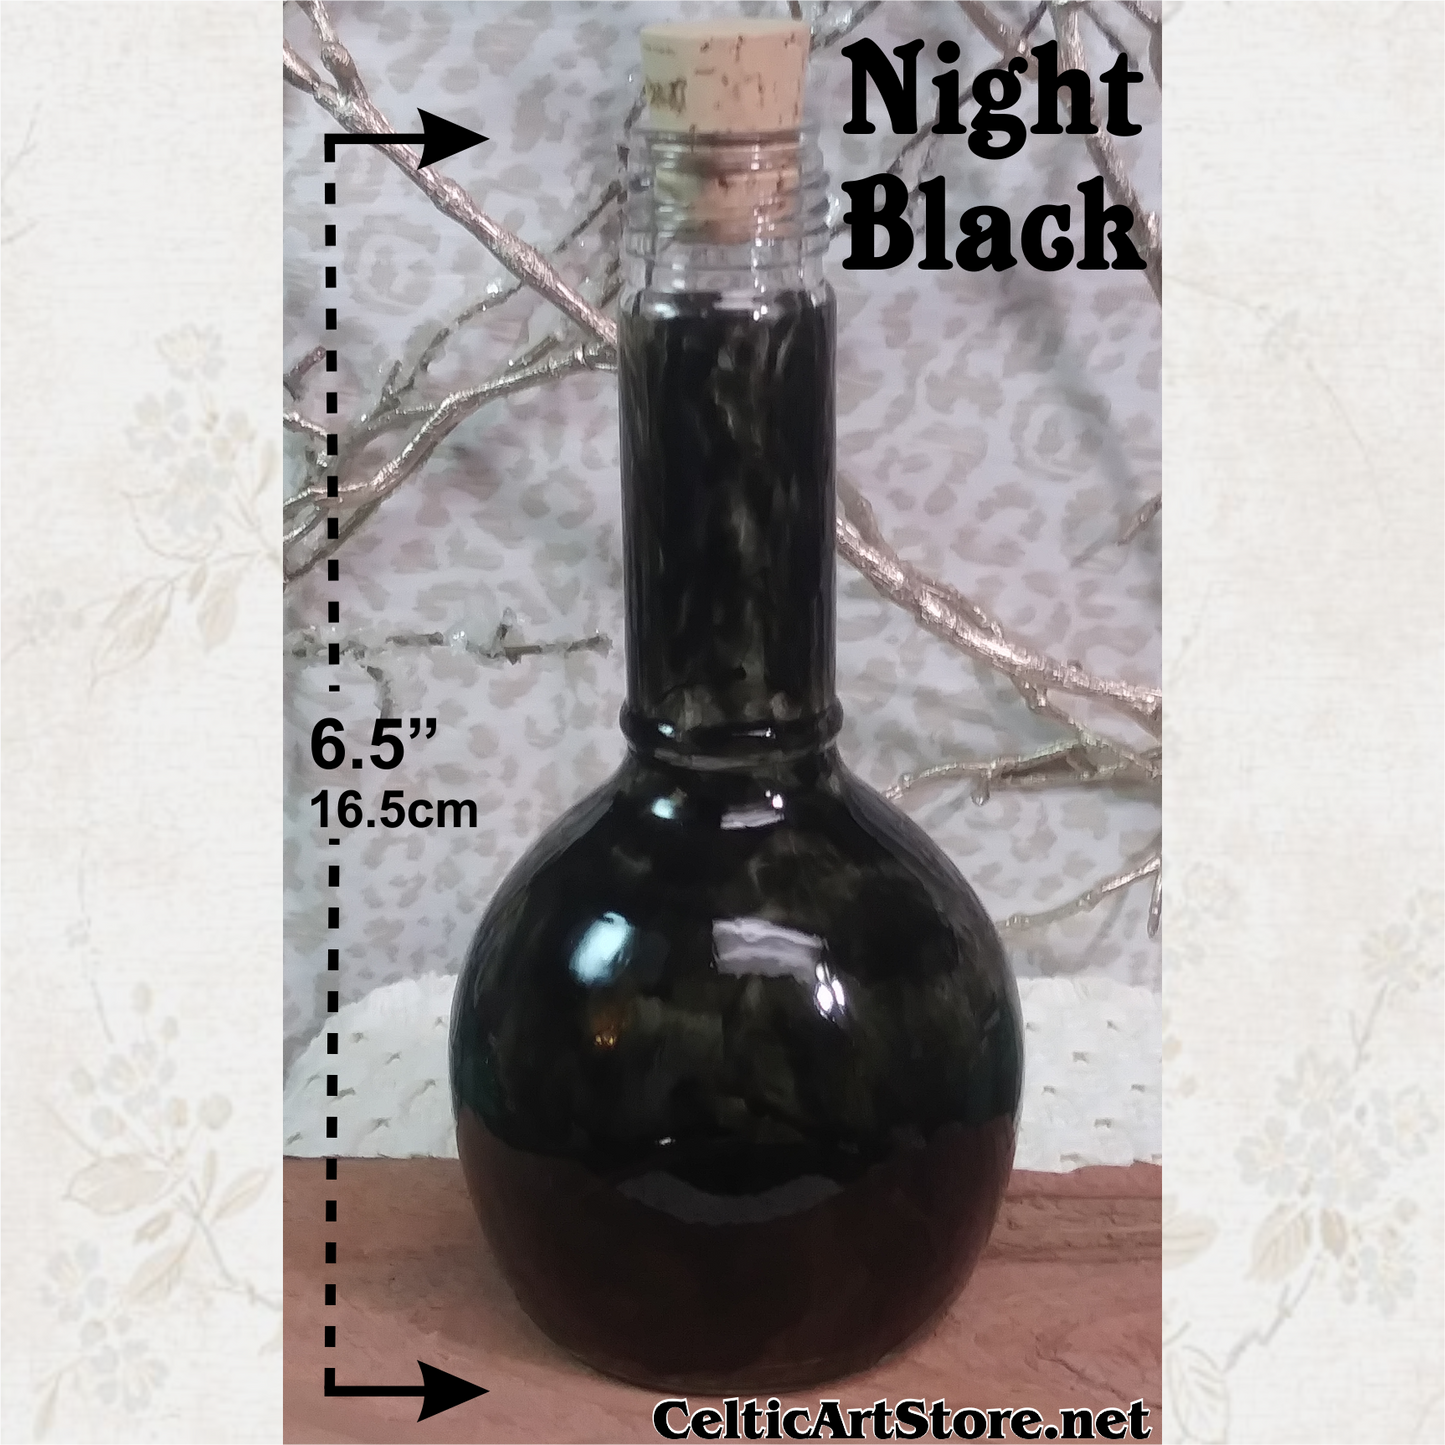 NIGHT BLACK Potion Bottle